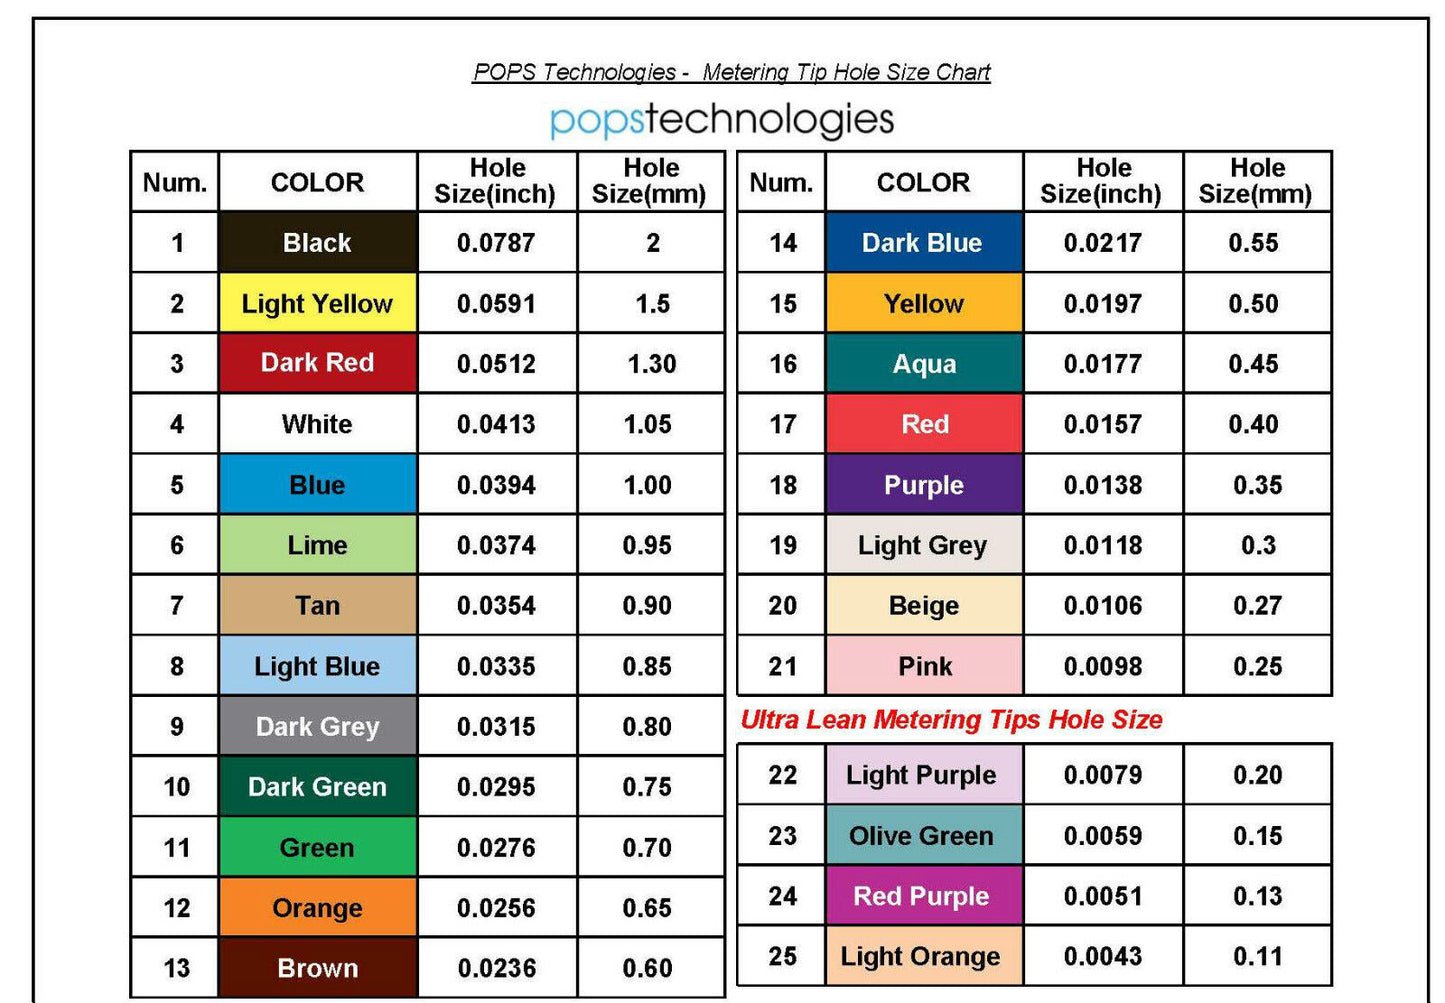 [21]pcs Metering Tips Pak from 21 Colors, 8117